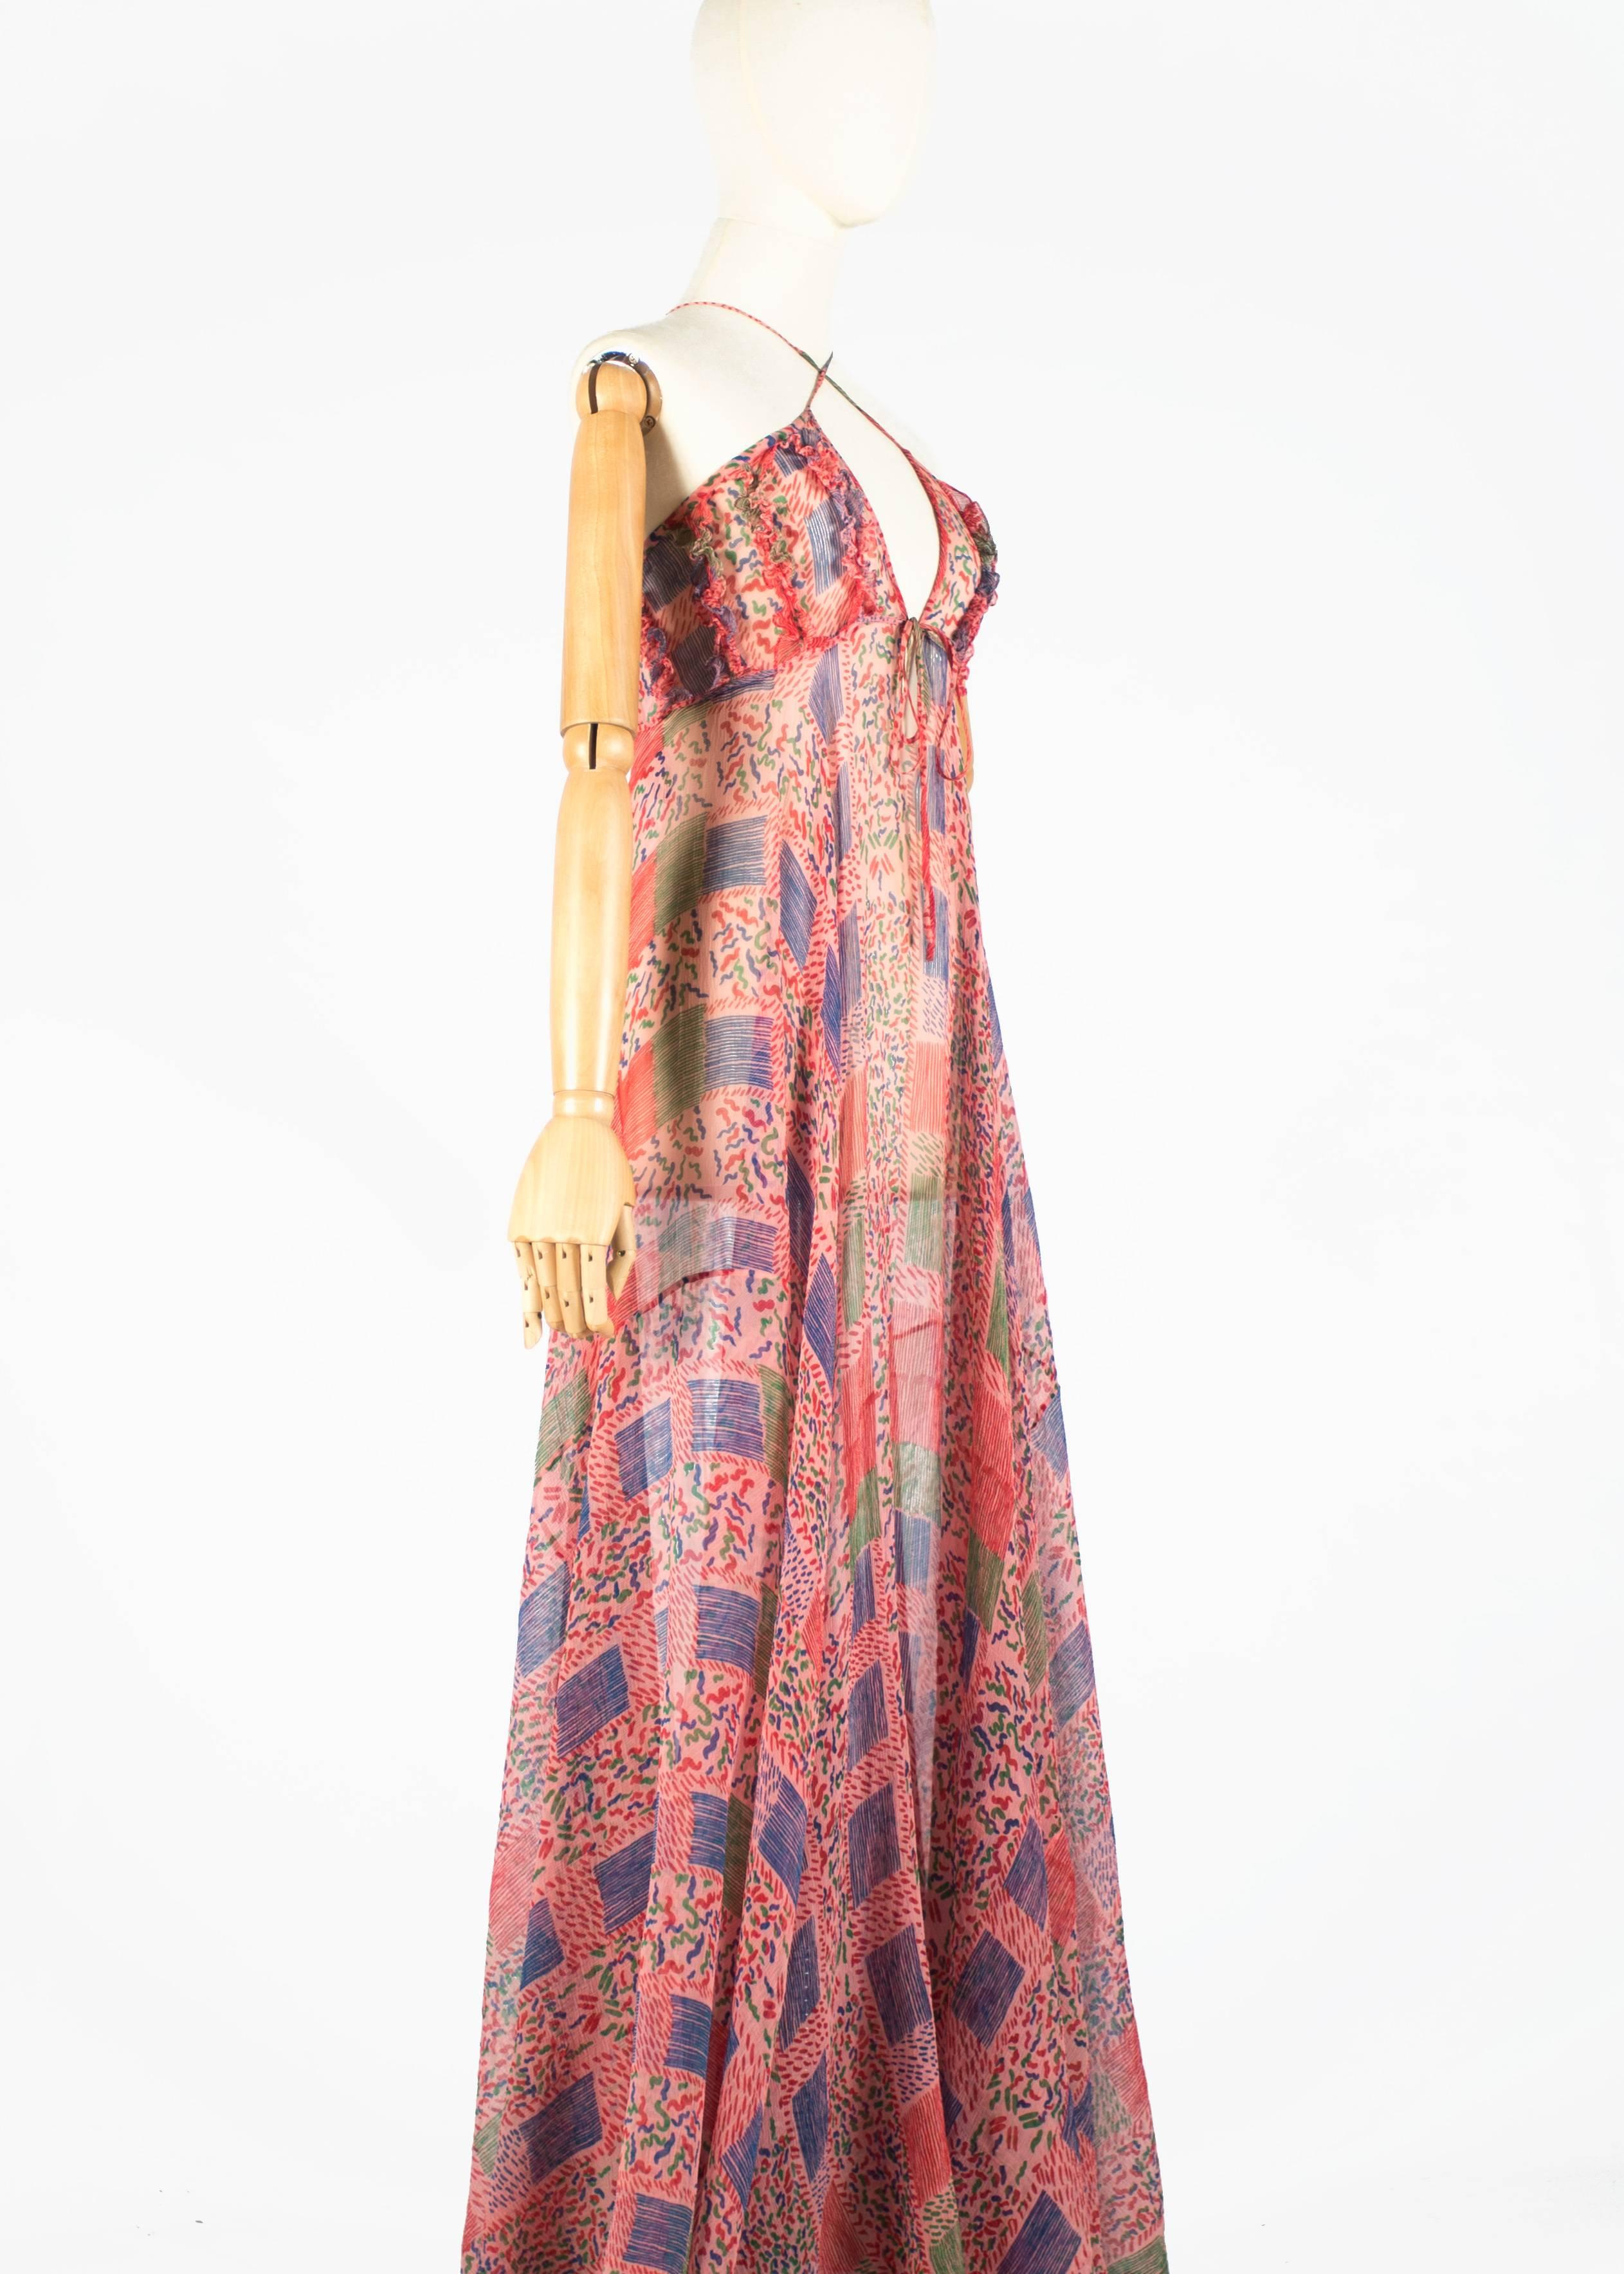 Ossie Clark / Celia Birtwell chiffon maxi dress with criss-cross lacing, c1976 1